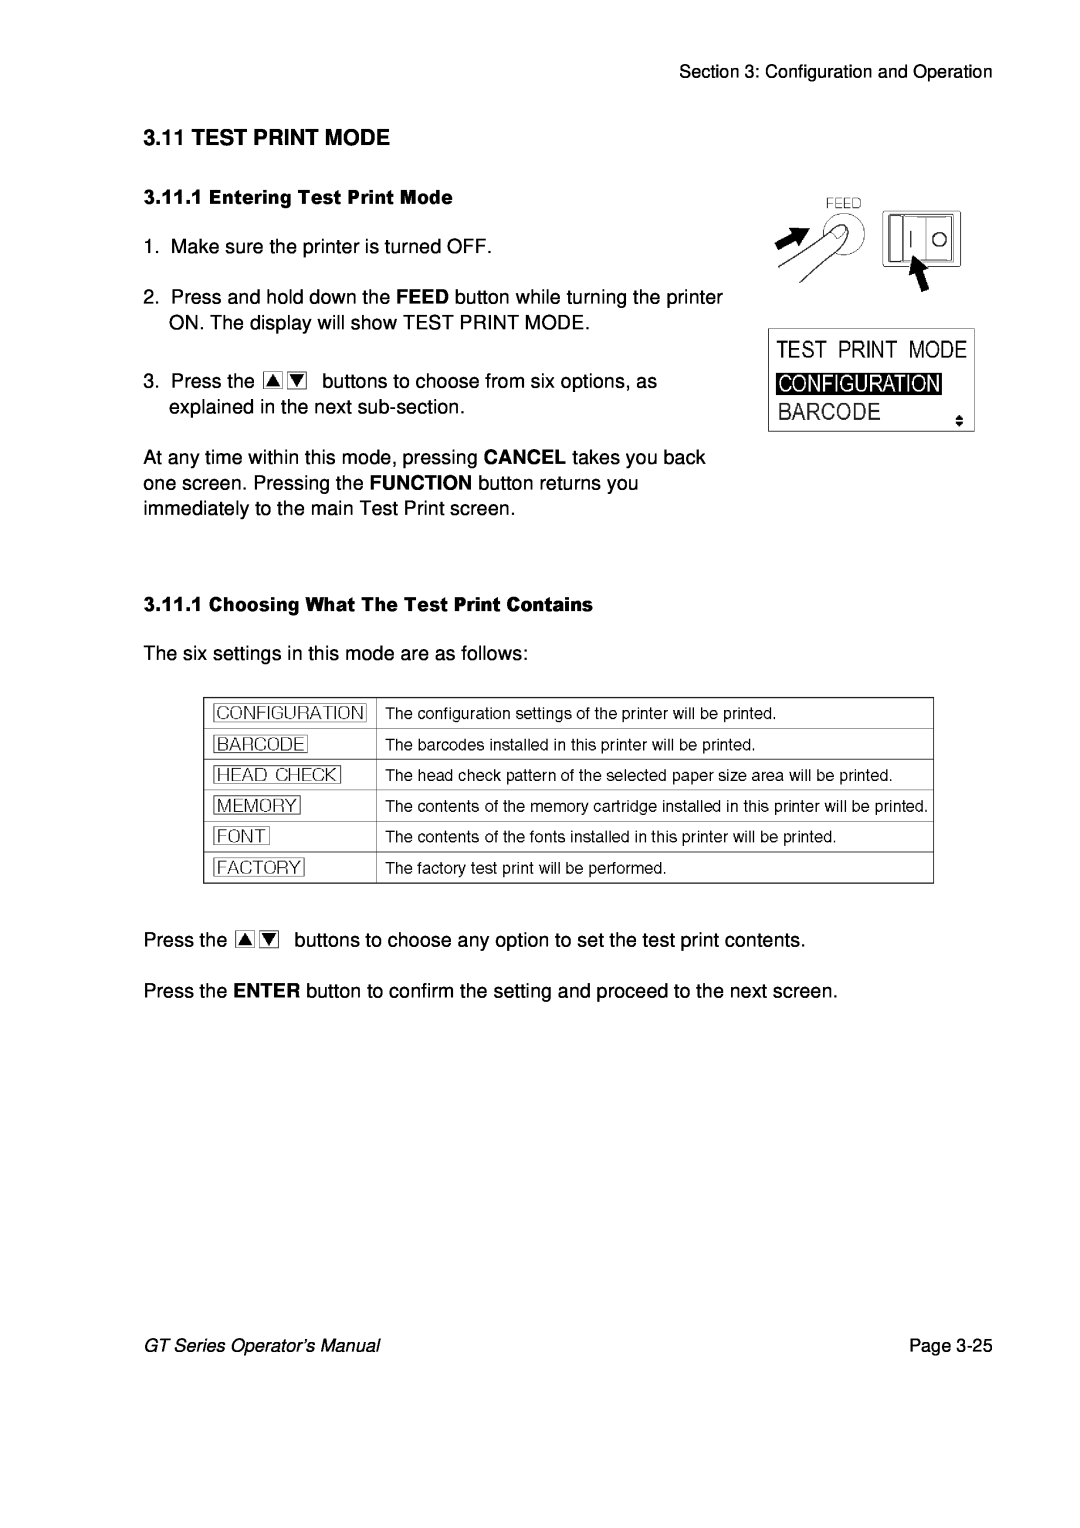 SATO GT424 manual Test Print Mode, 13.11Make.1Enteringsure theTestprinterPrintis turnedModeOFF 